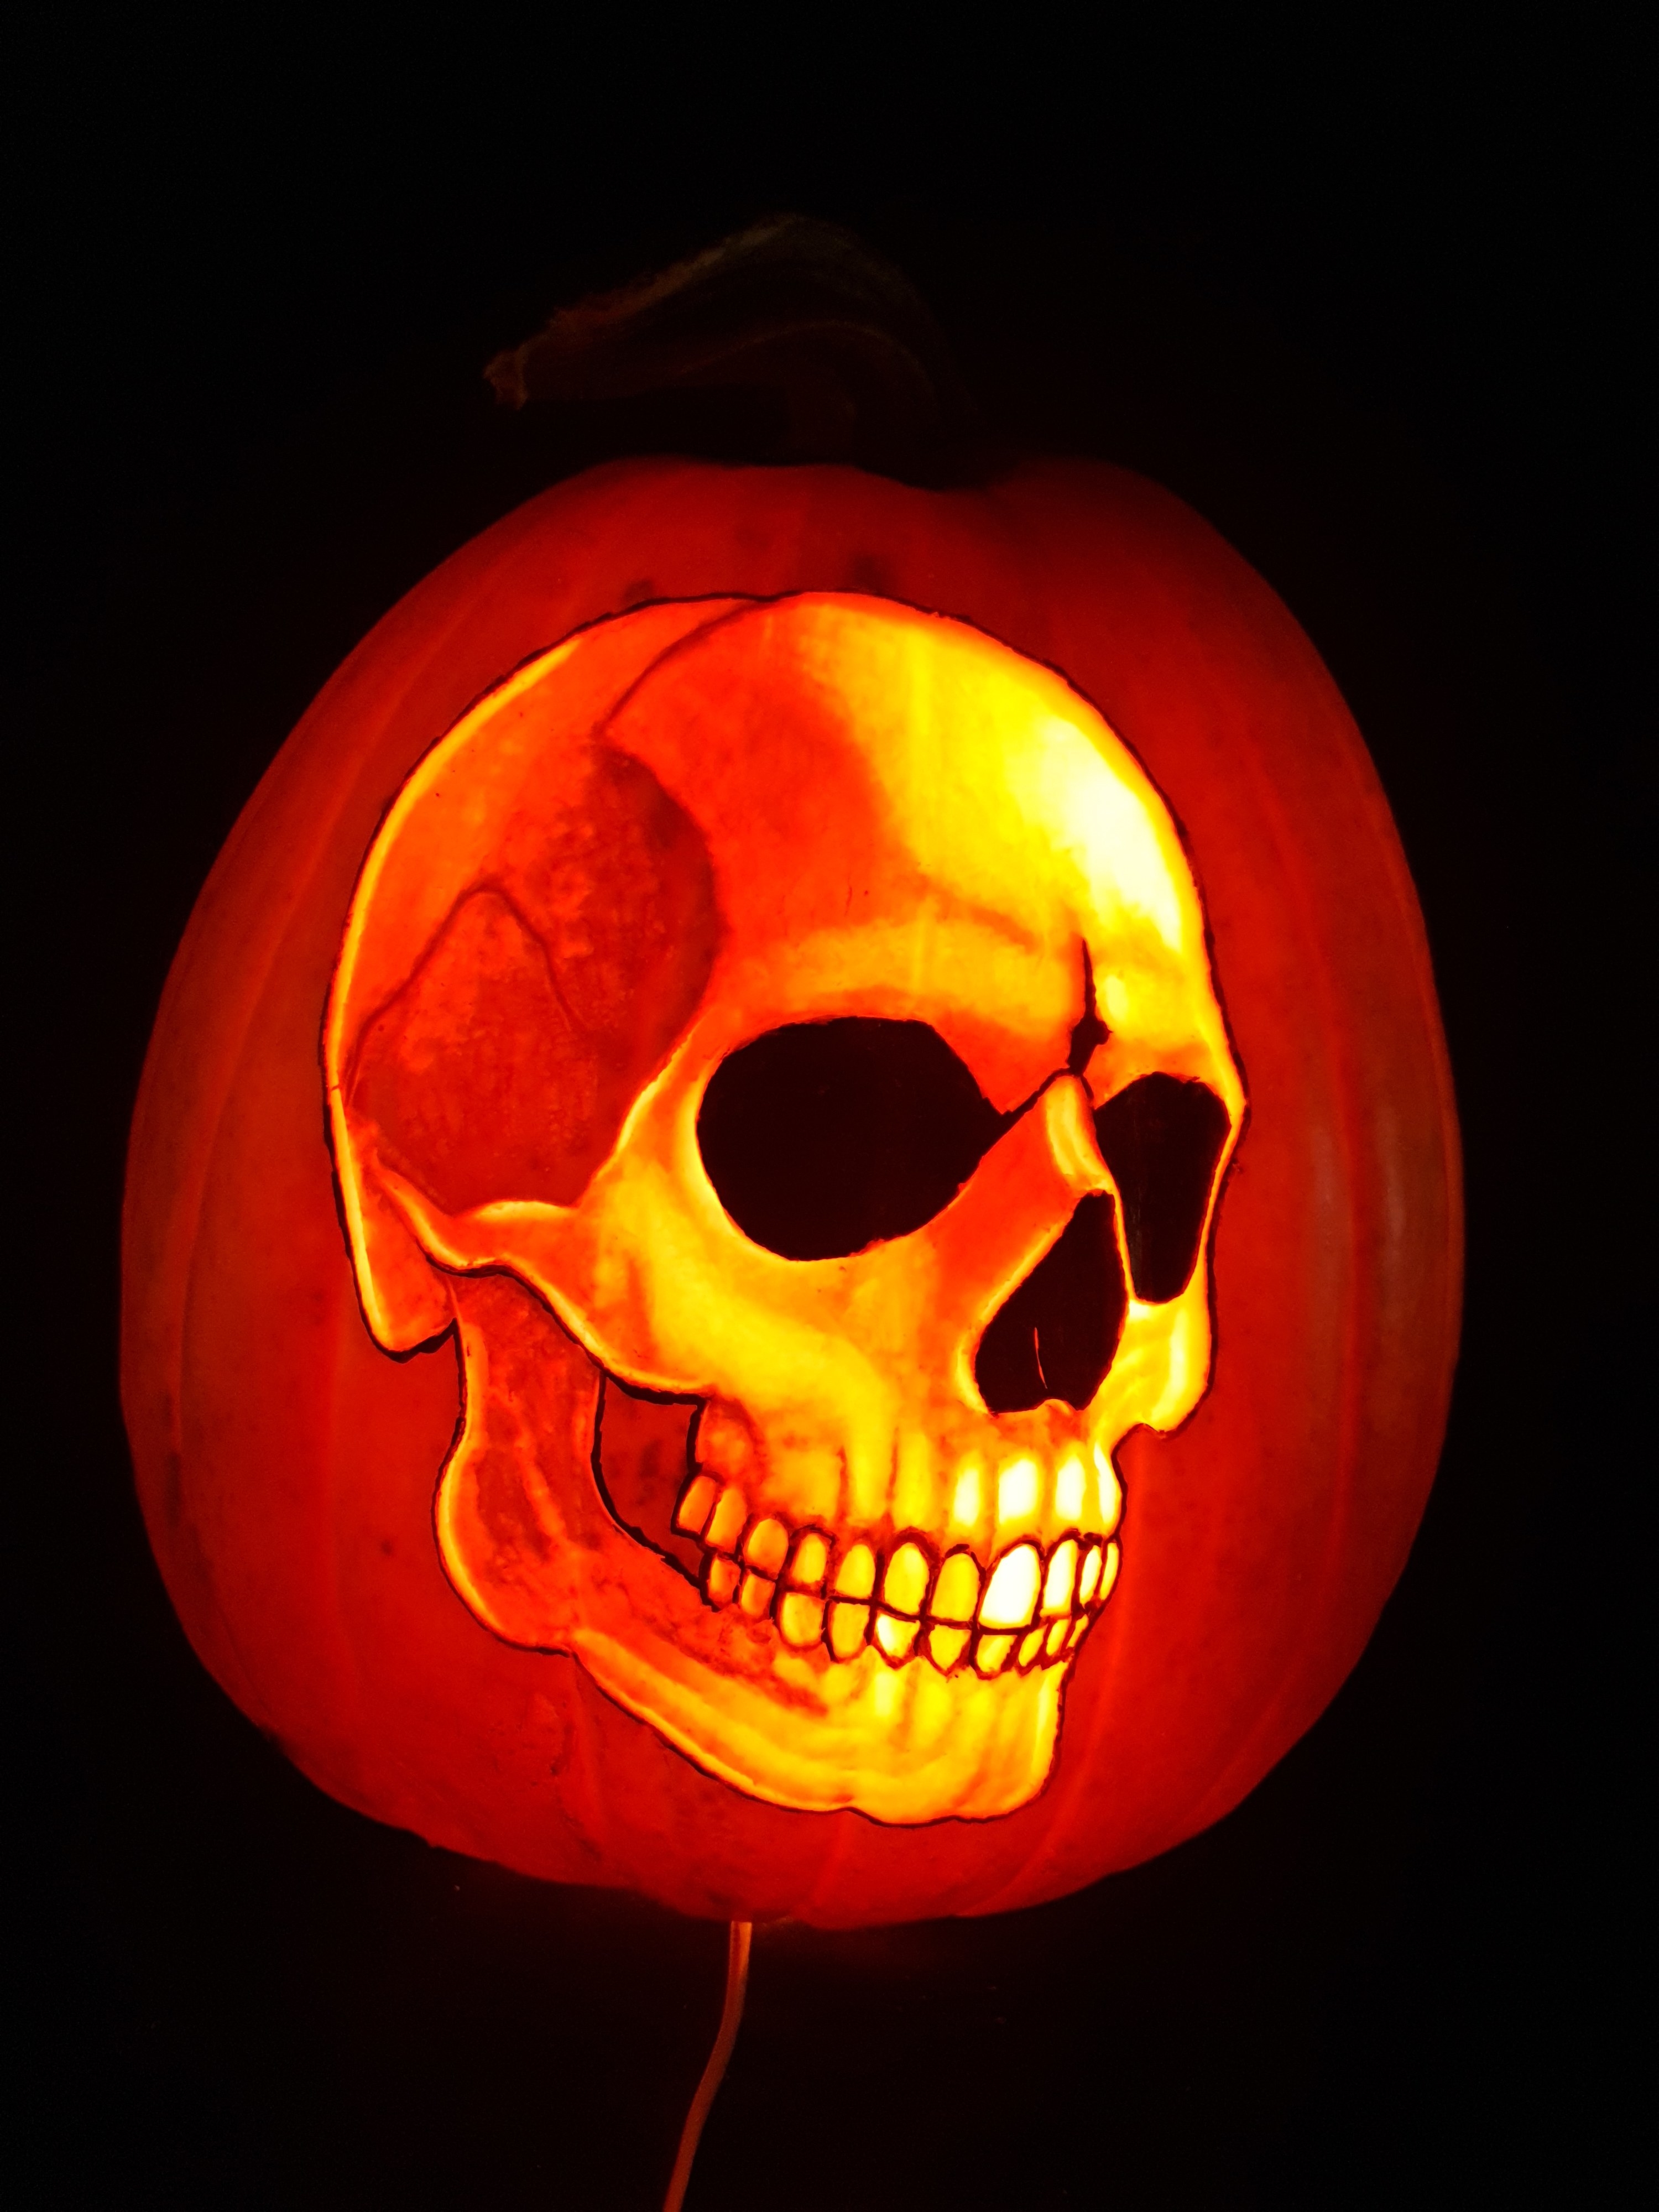 a skull carved on a pumpkin